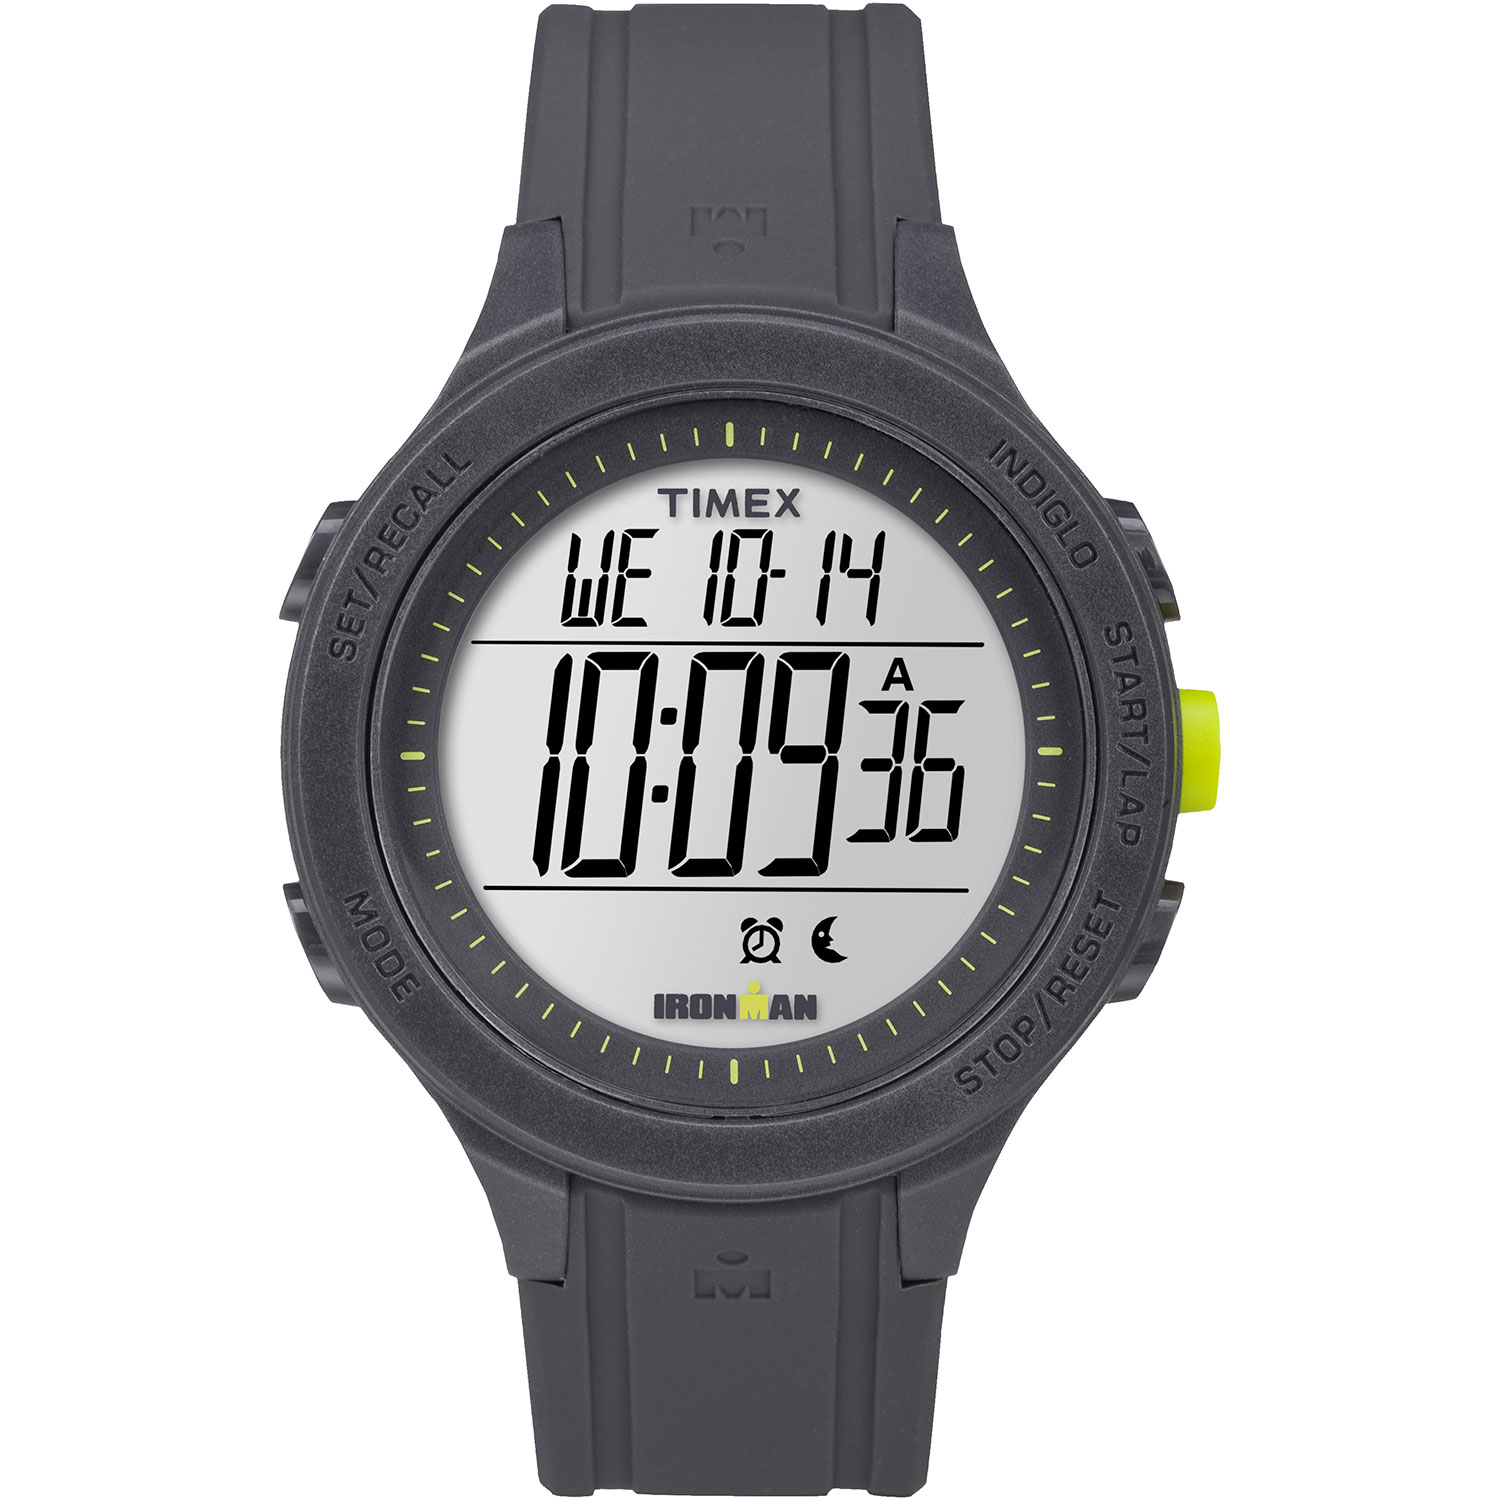 Timex IRONMAN Essential 30 Digital Sport Watch - Black